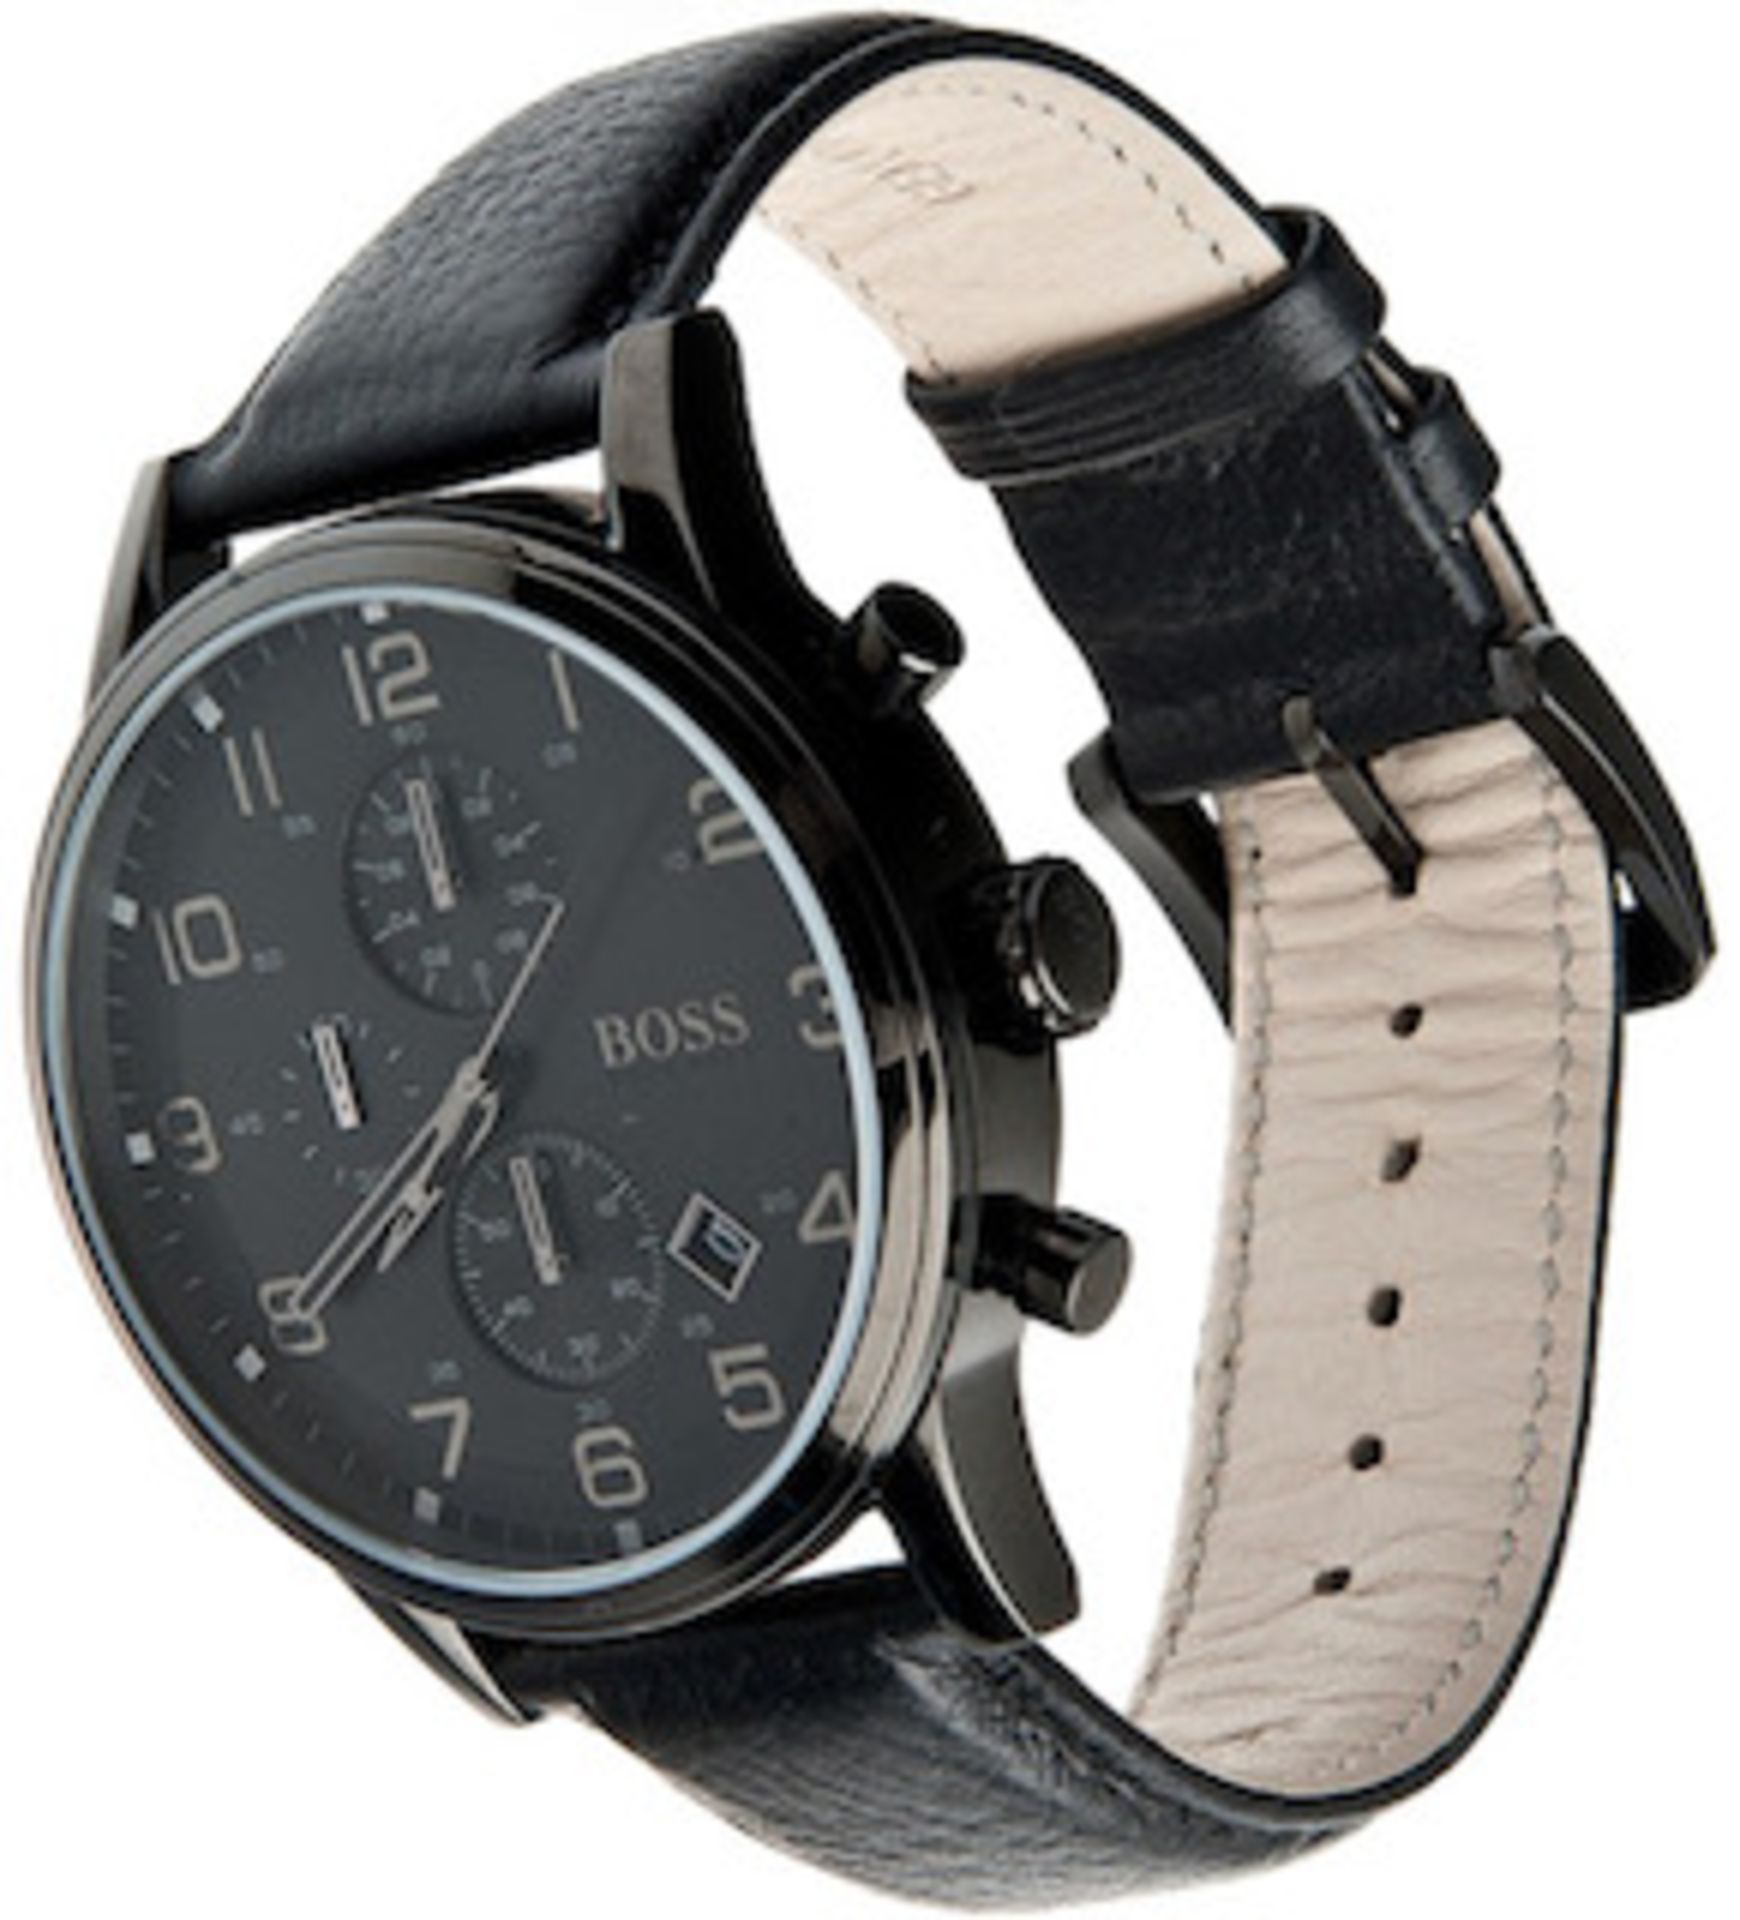 Hugo Boss 1512567 Men's Aeroliner Black Dial Black Leather Strap Chronograph Watch - Image 4 of 5